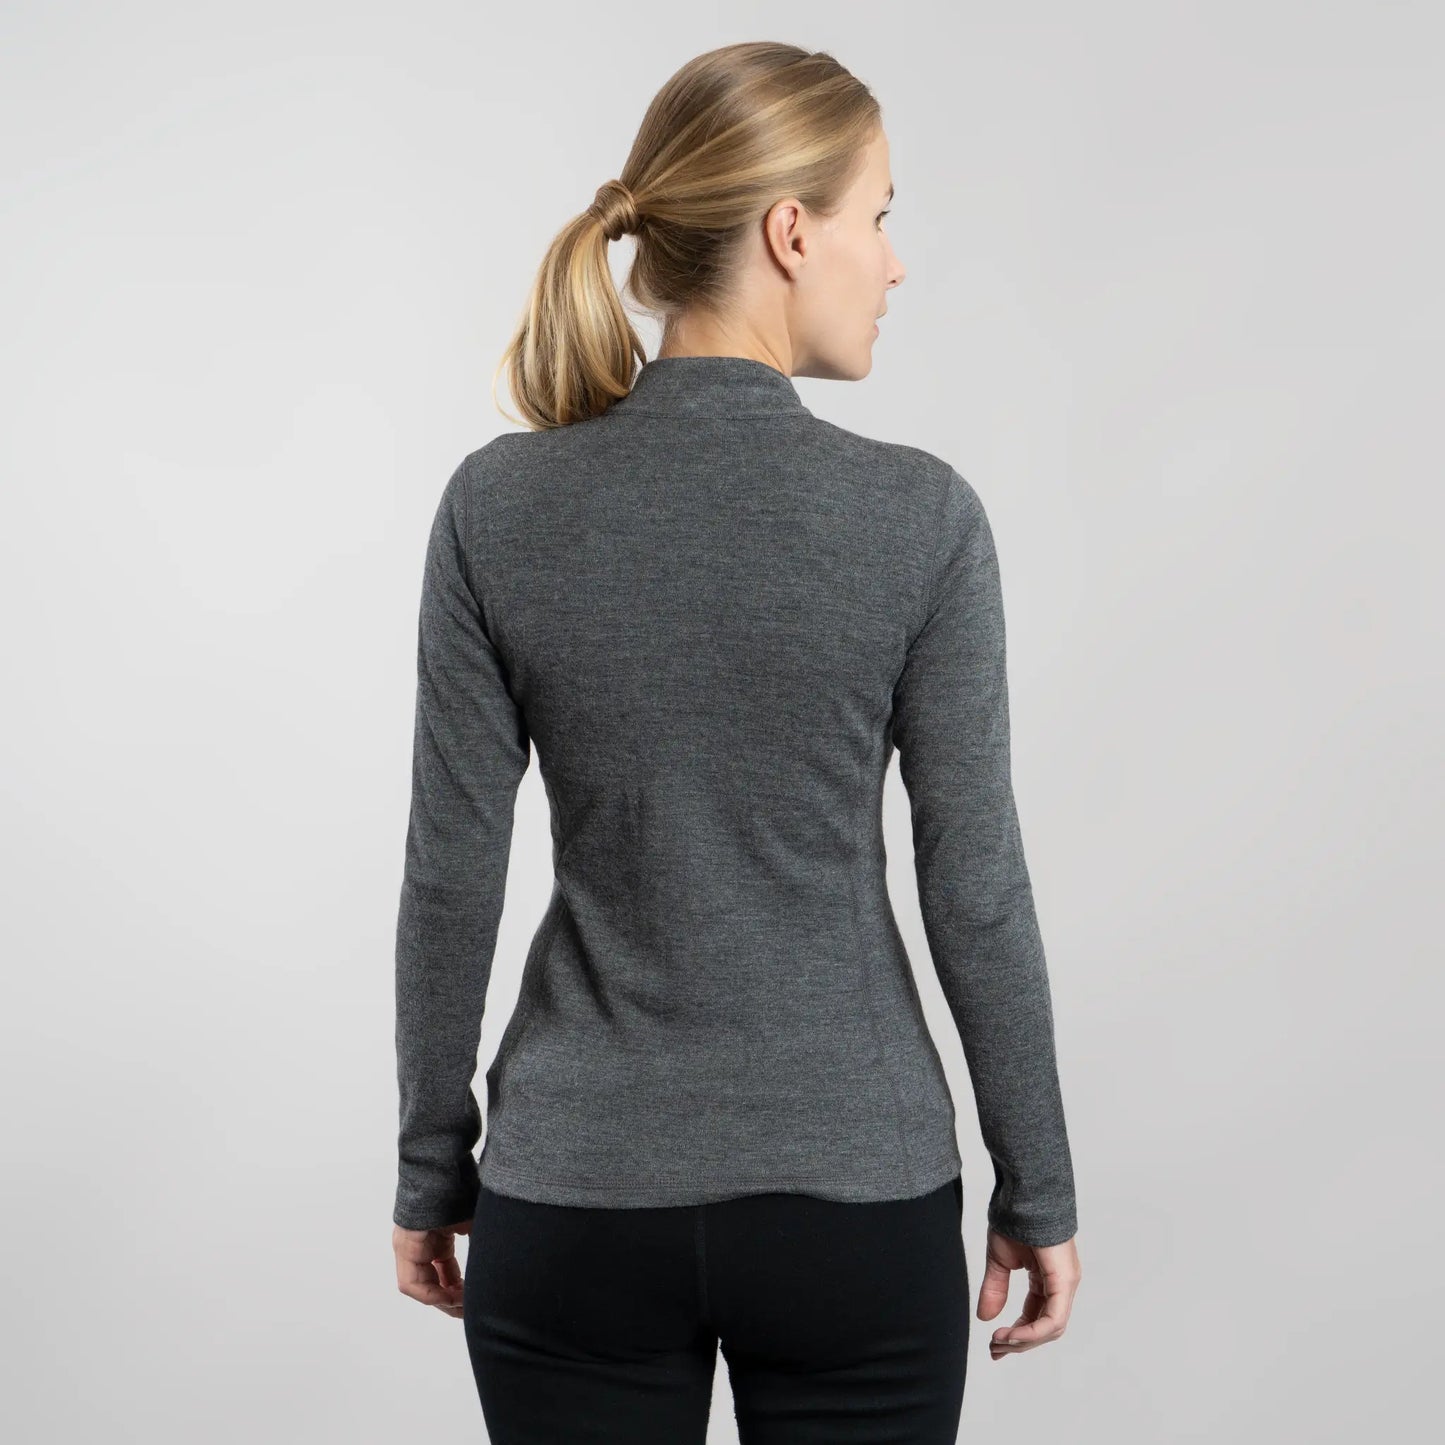 womens ultimate outdoor baselayer half zip color gray